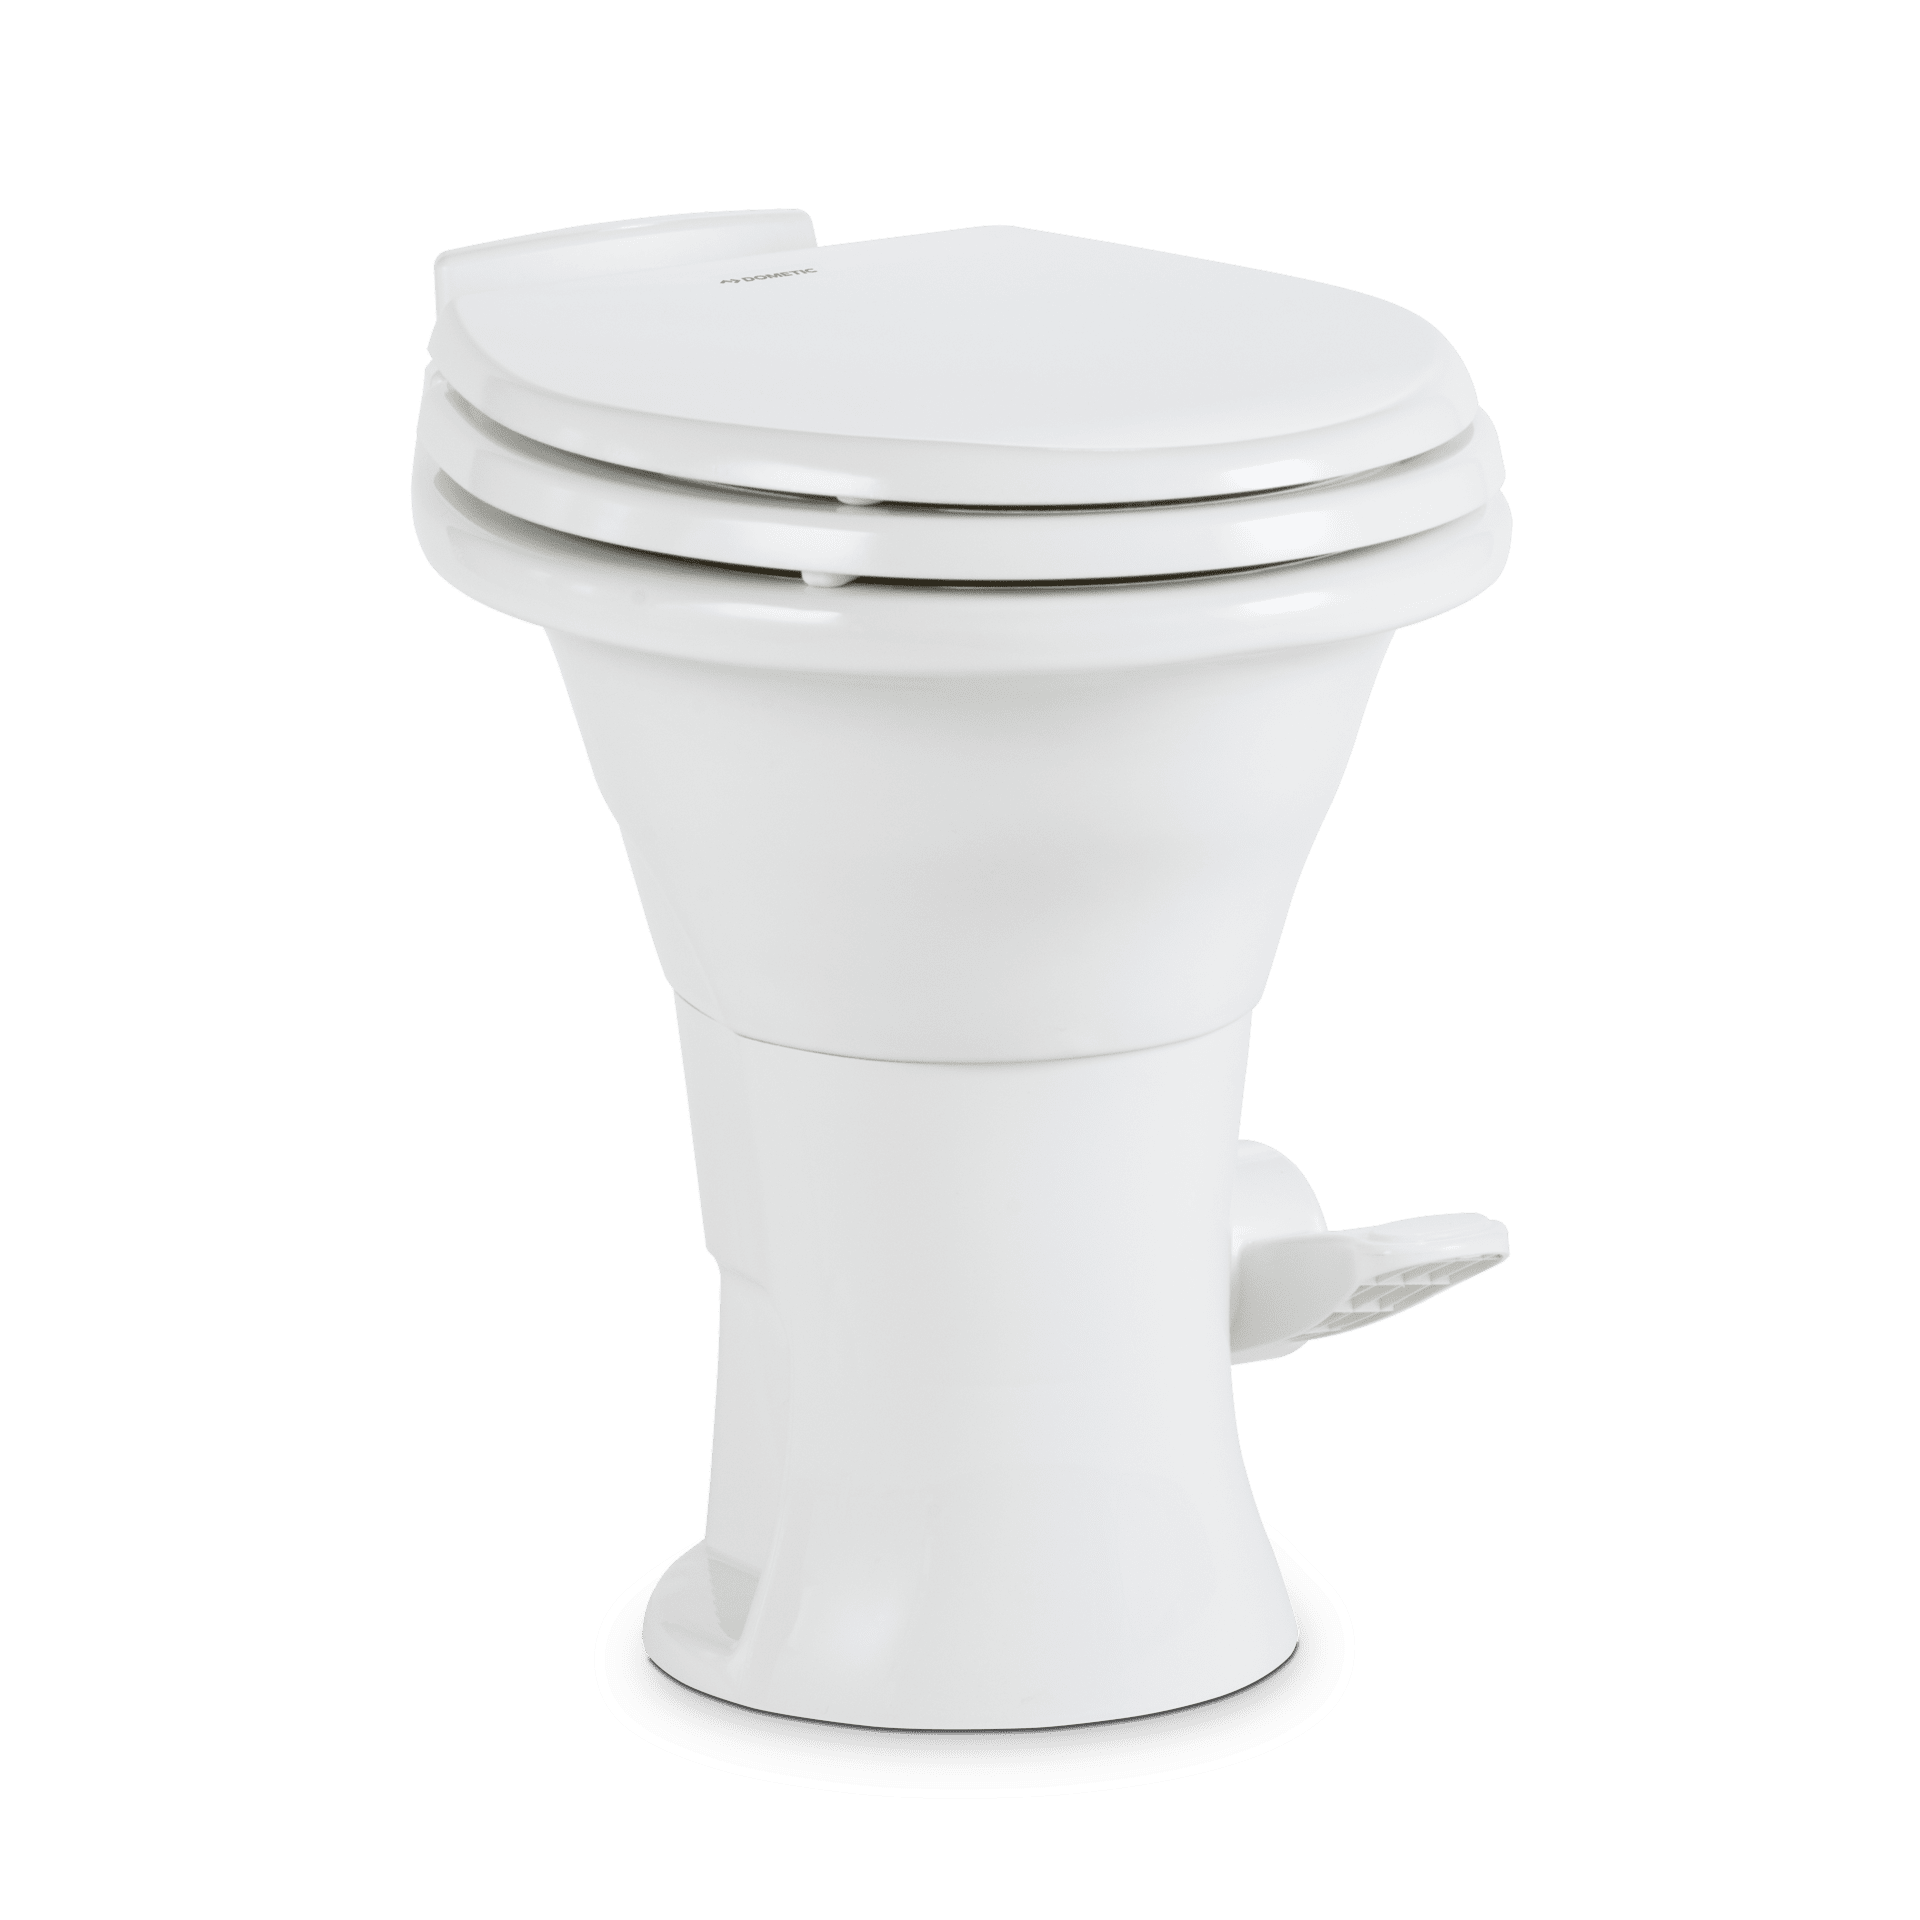 Dometic 310 Series Gravity Discharge Toilet